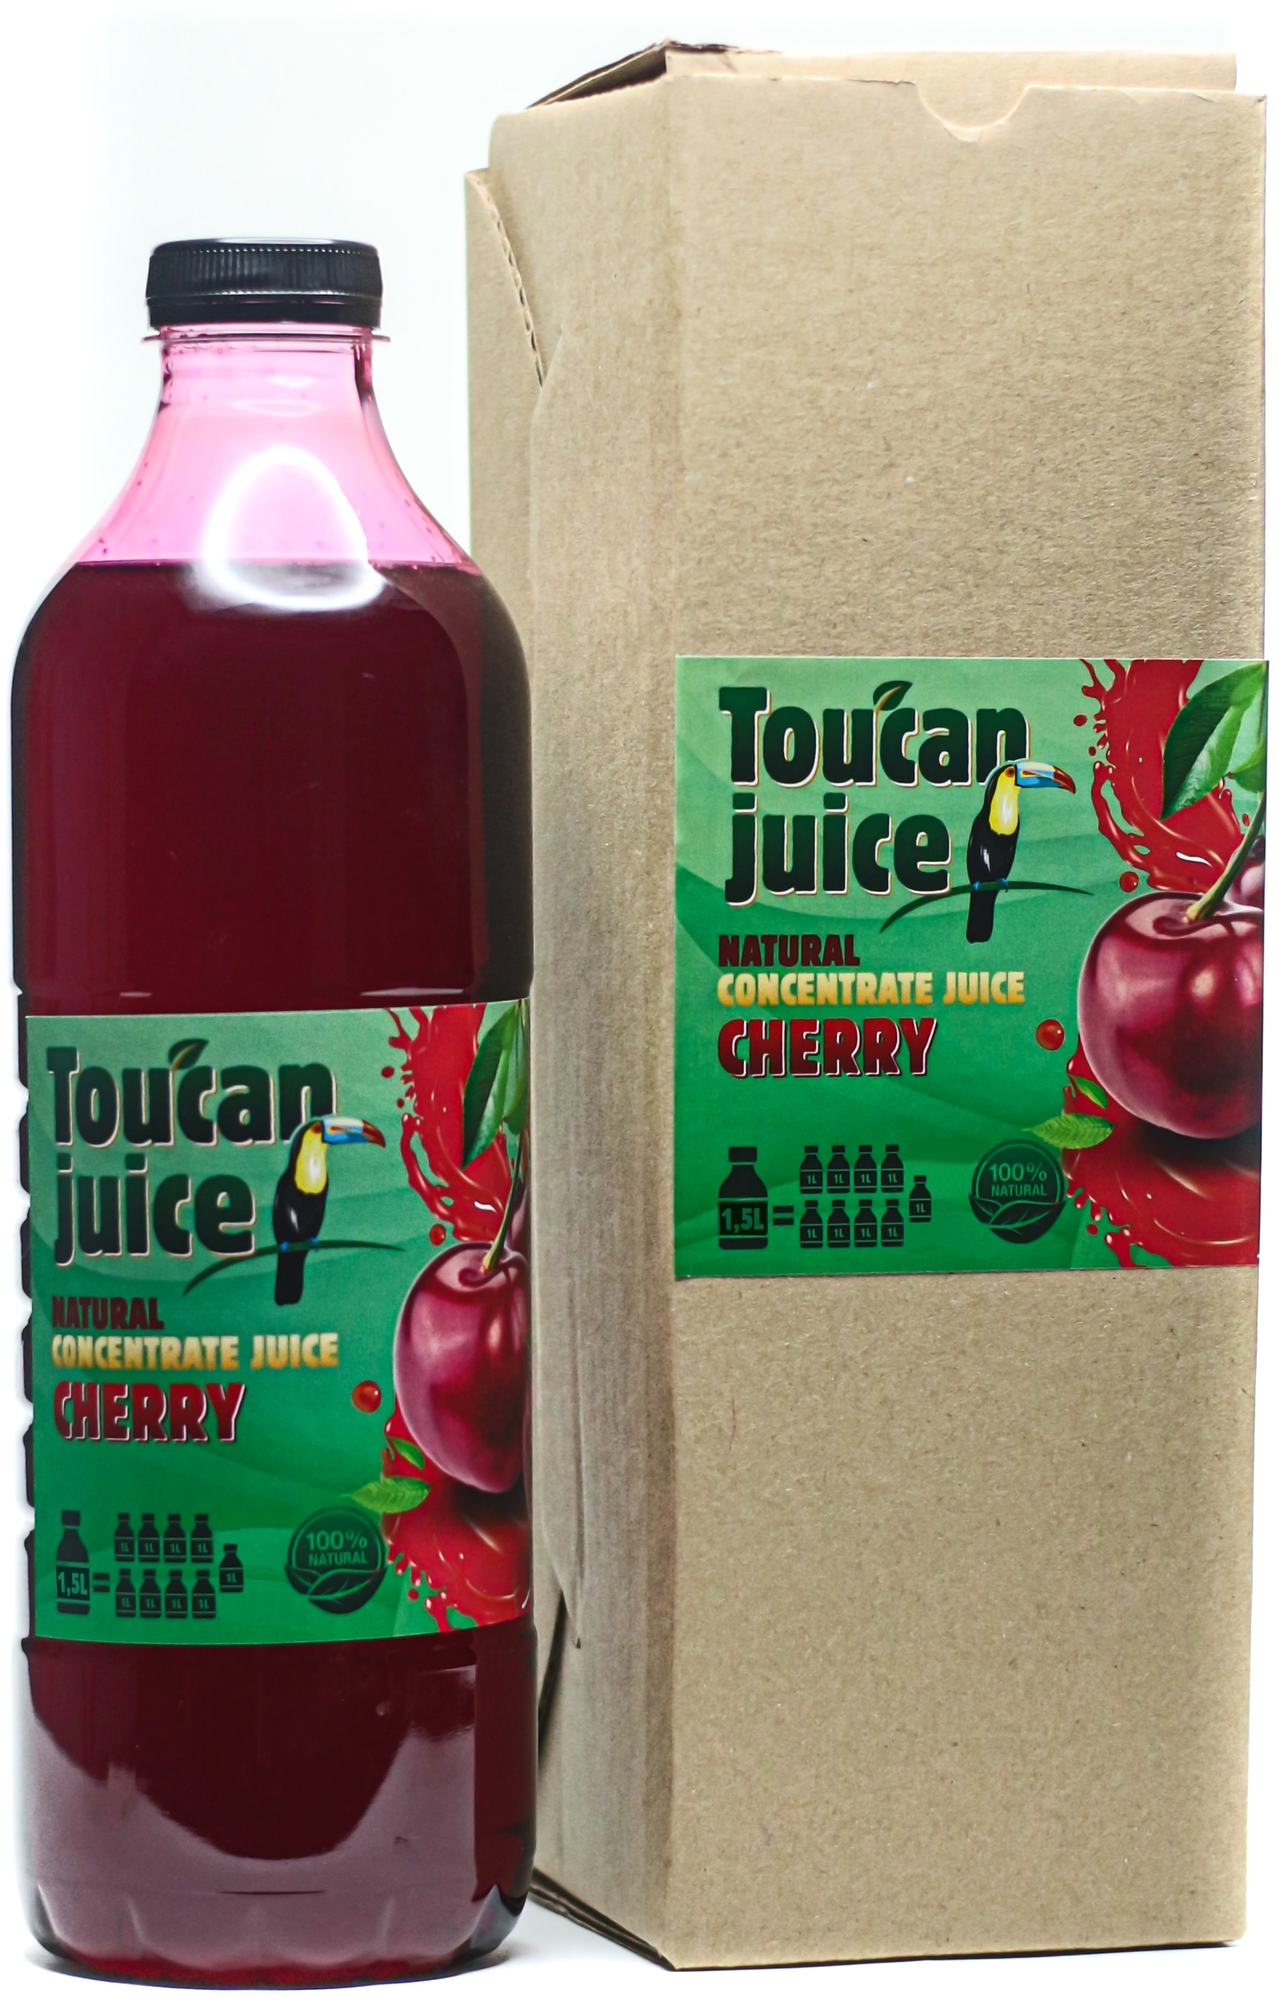 Toucan juice концентрированный сок Вишни 1,5л.